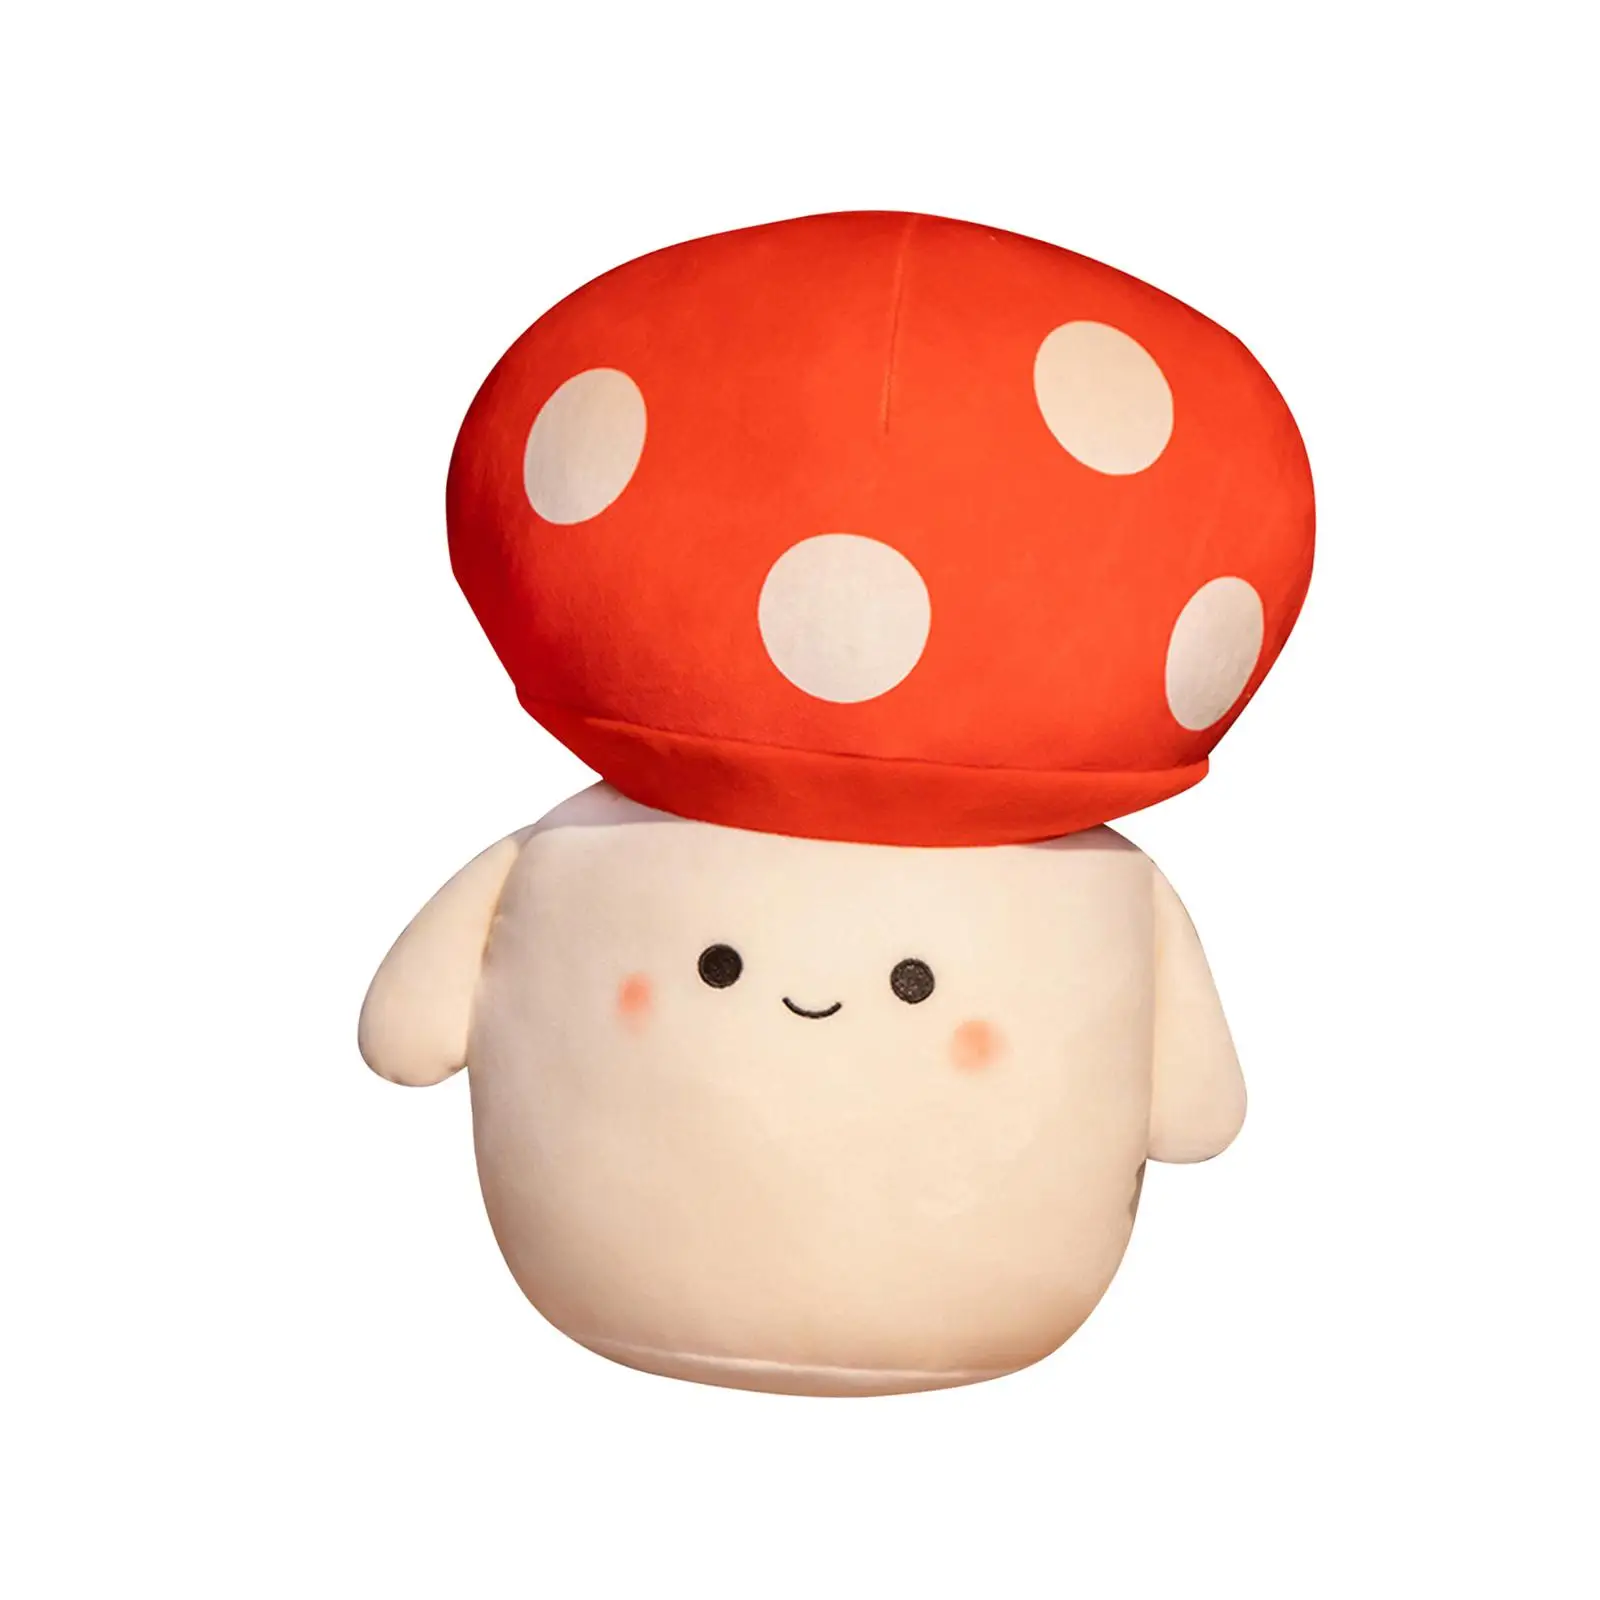 Cute Plush Mushroom Toy Ornament Stuffed Mushroom Toy for Bedroom Decor Housewarming Gift